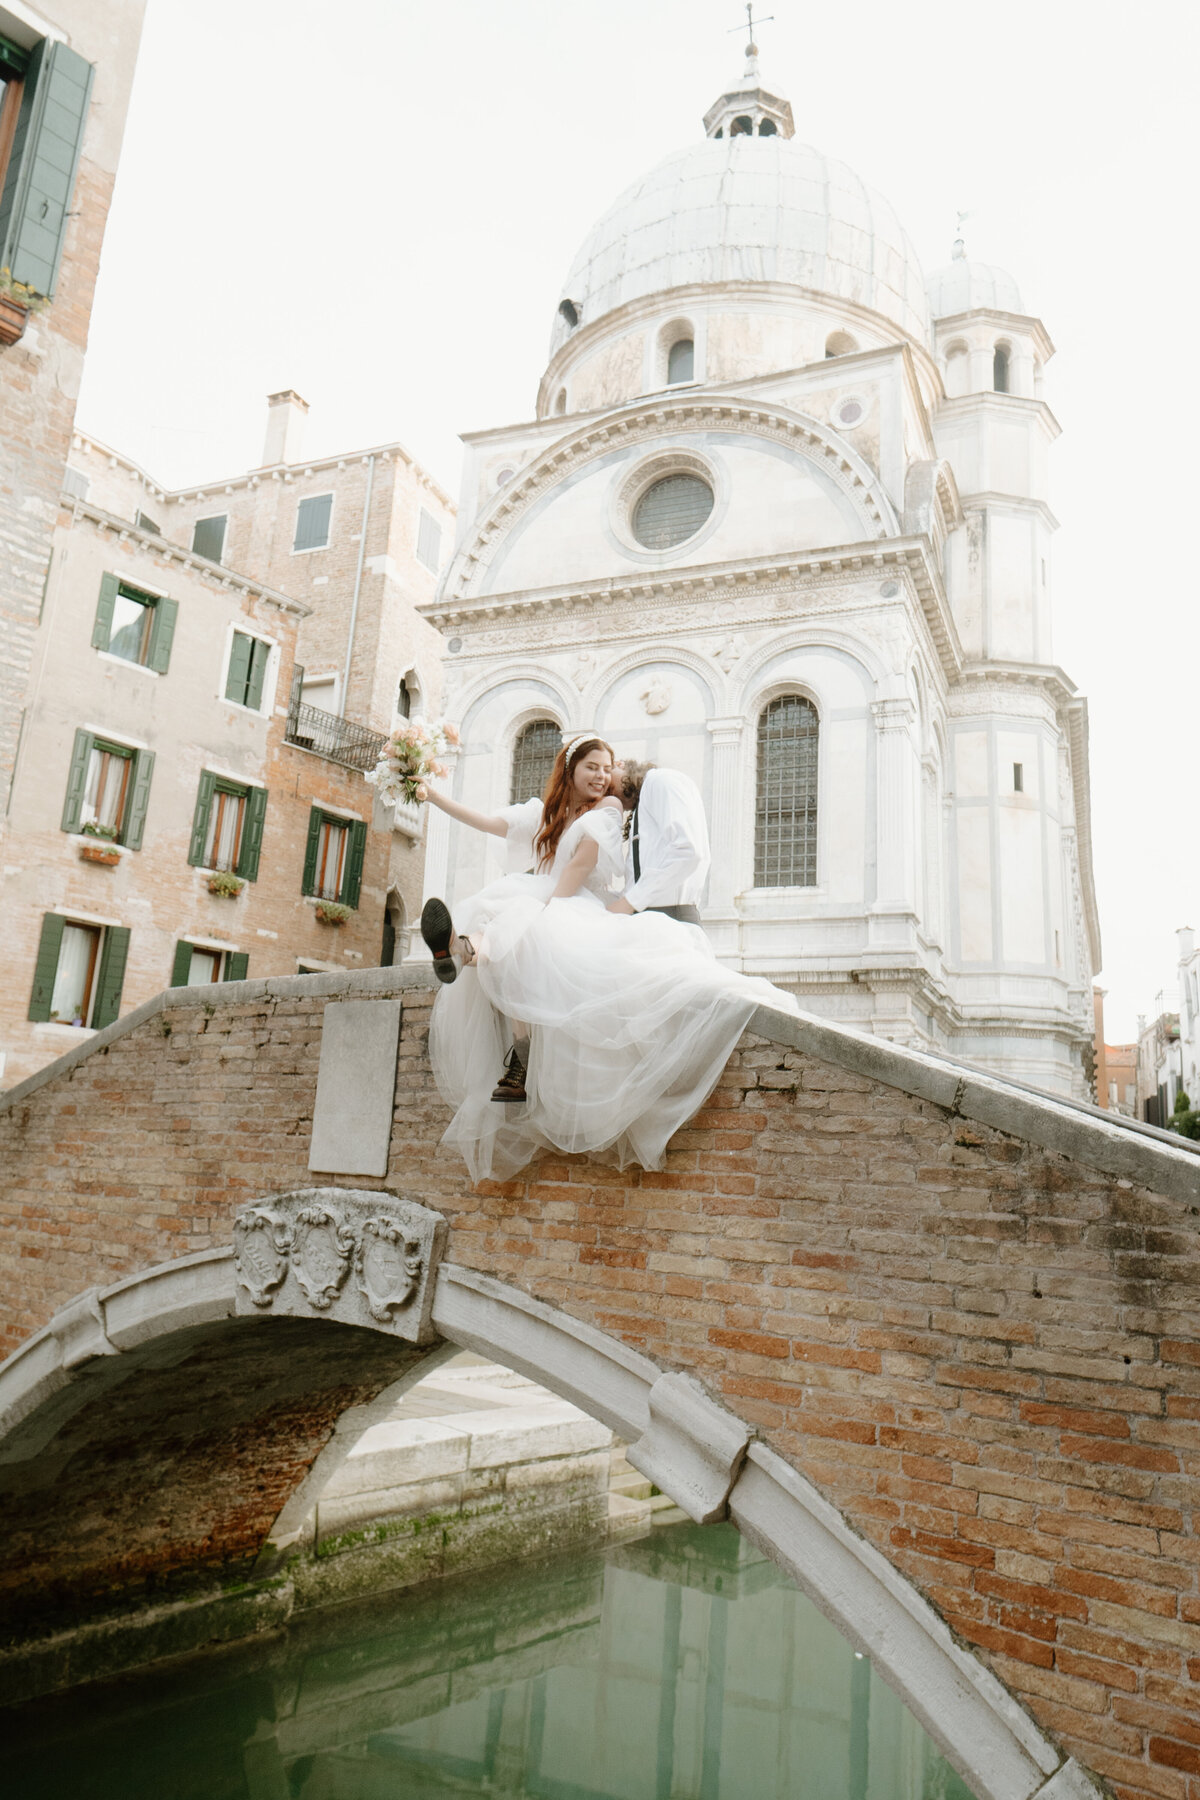 -Documentary-Style-Editorial-Vogue-gondola-Italy-Destination-Wedding-Leah-Gunn-PhotographyDocumentary-Style-Editorial-Vogue-gondola-Italy-Destination-Wedding-Leah-Gunn-Photography-20